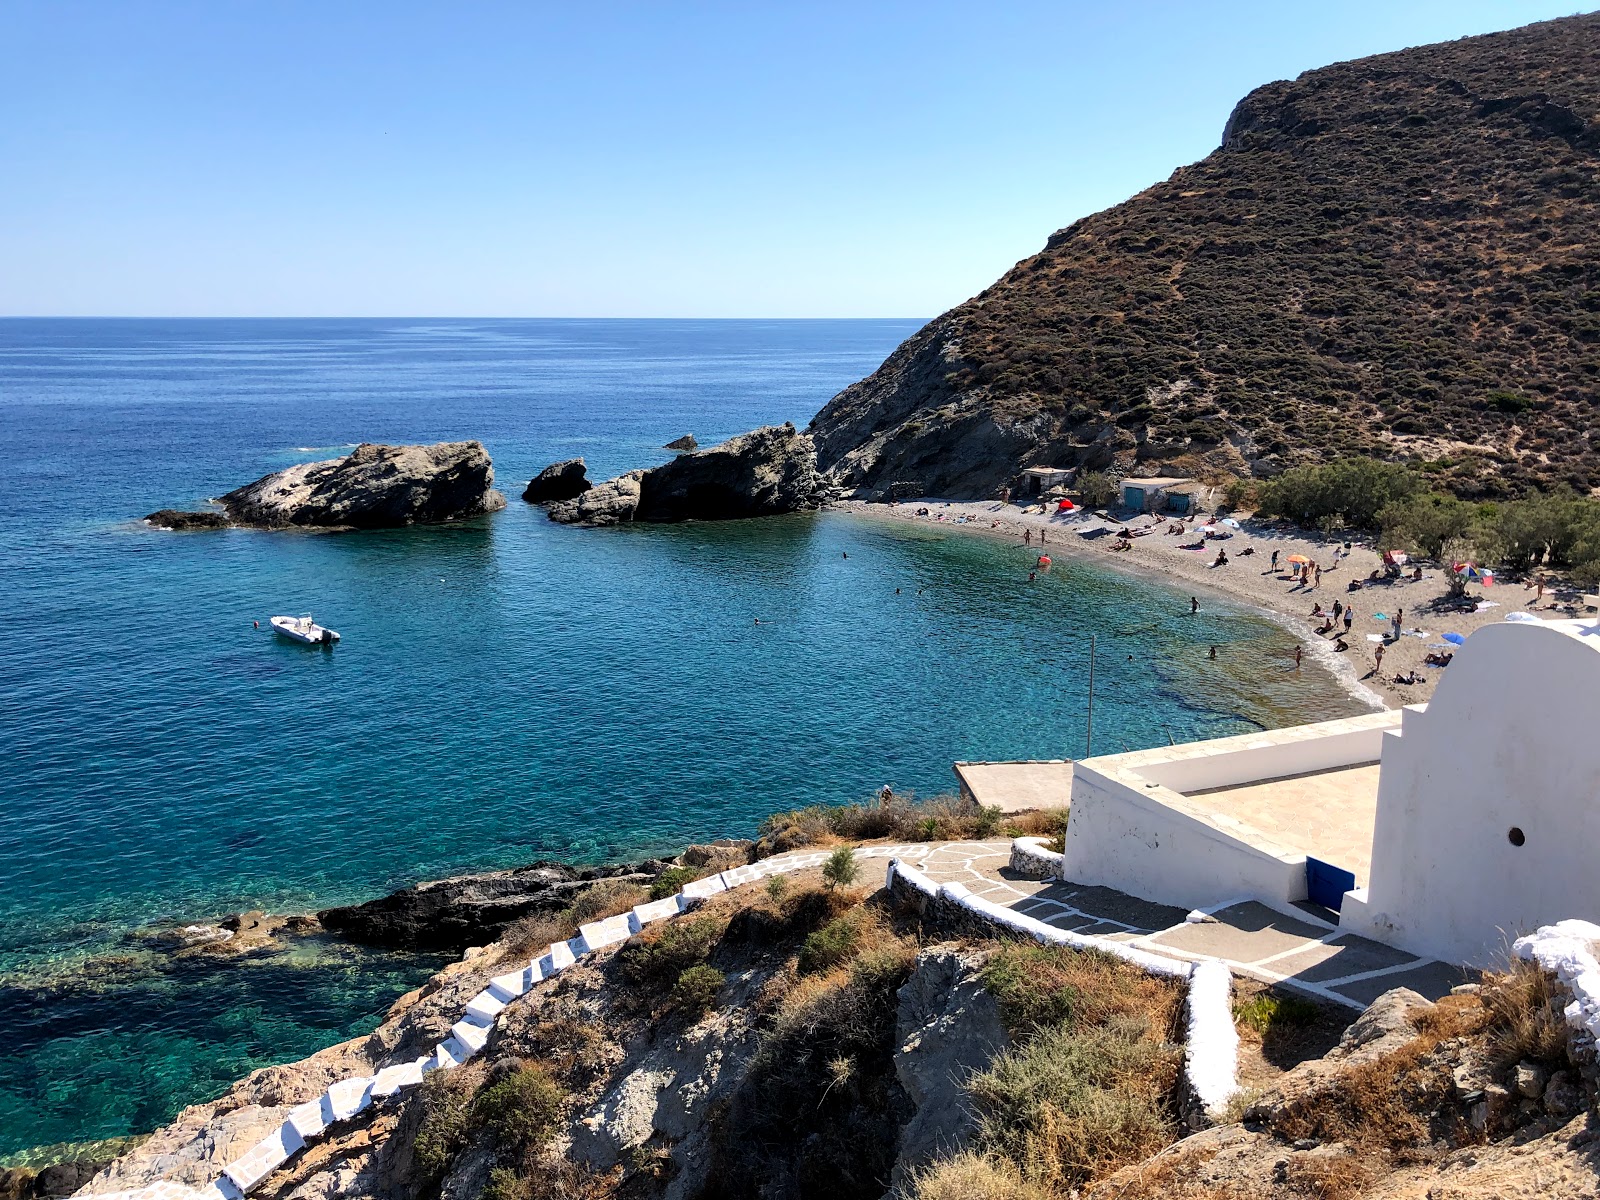 Photo of Agios Nikolaos and its beautiful scenery